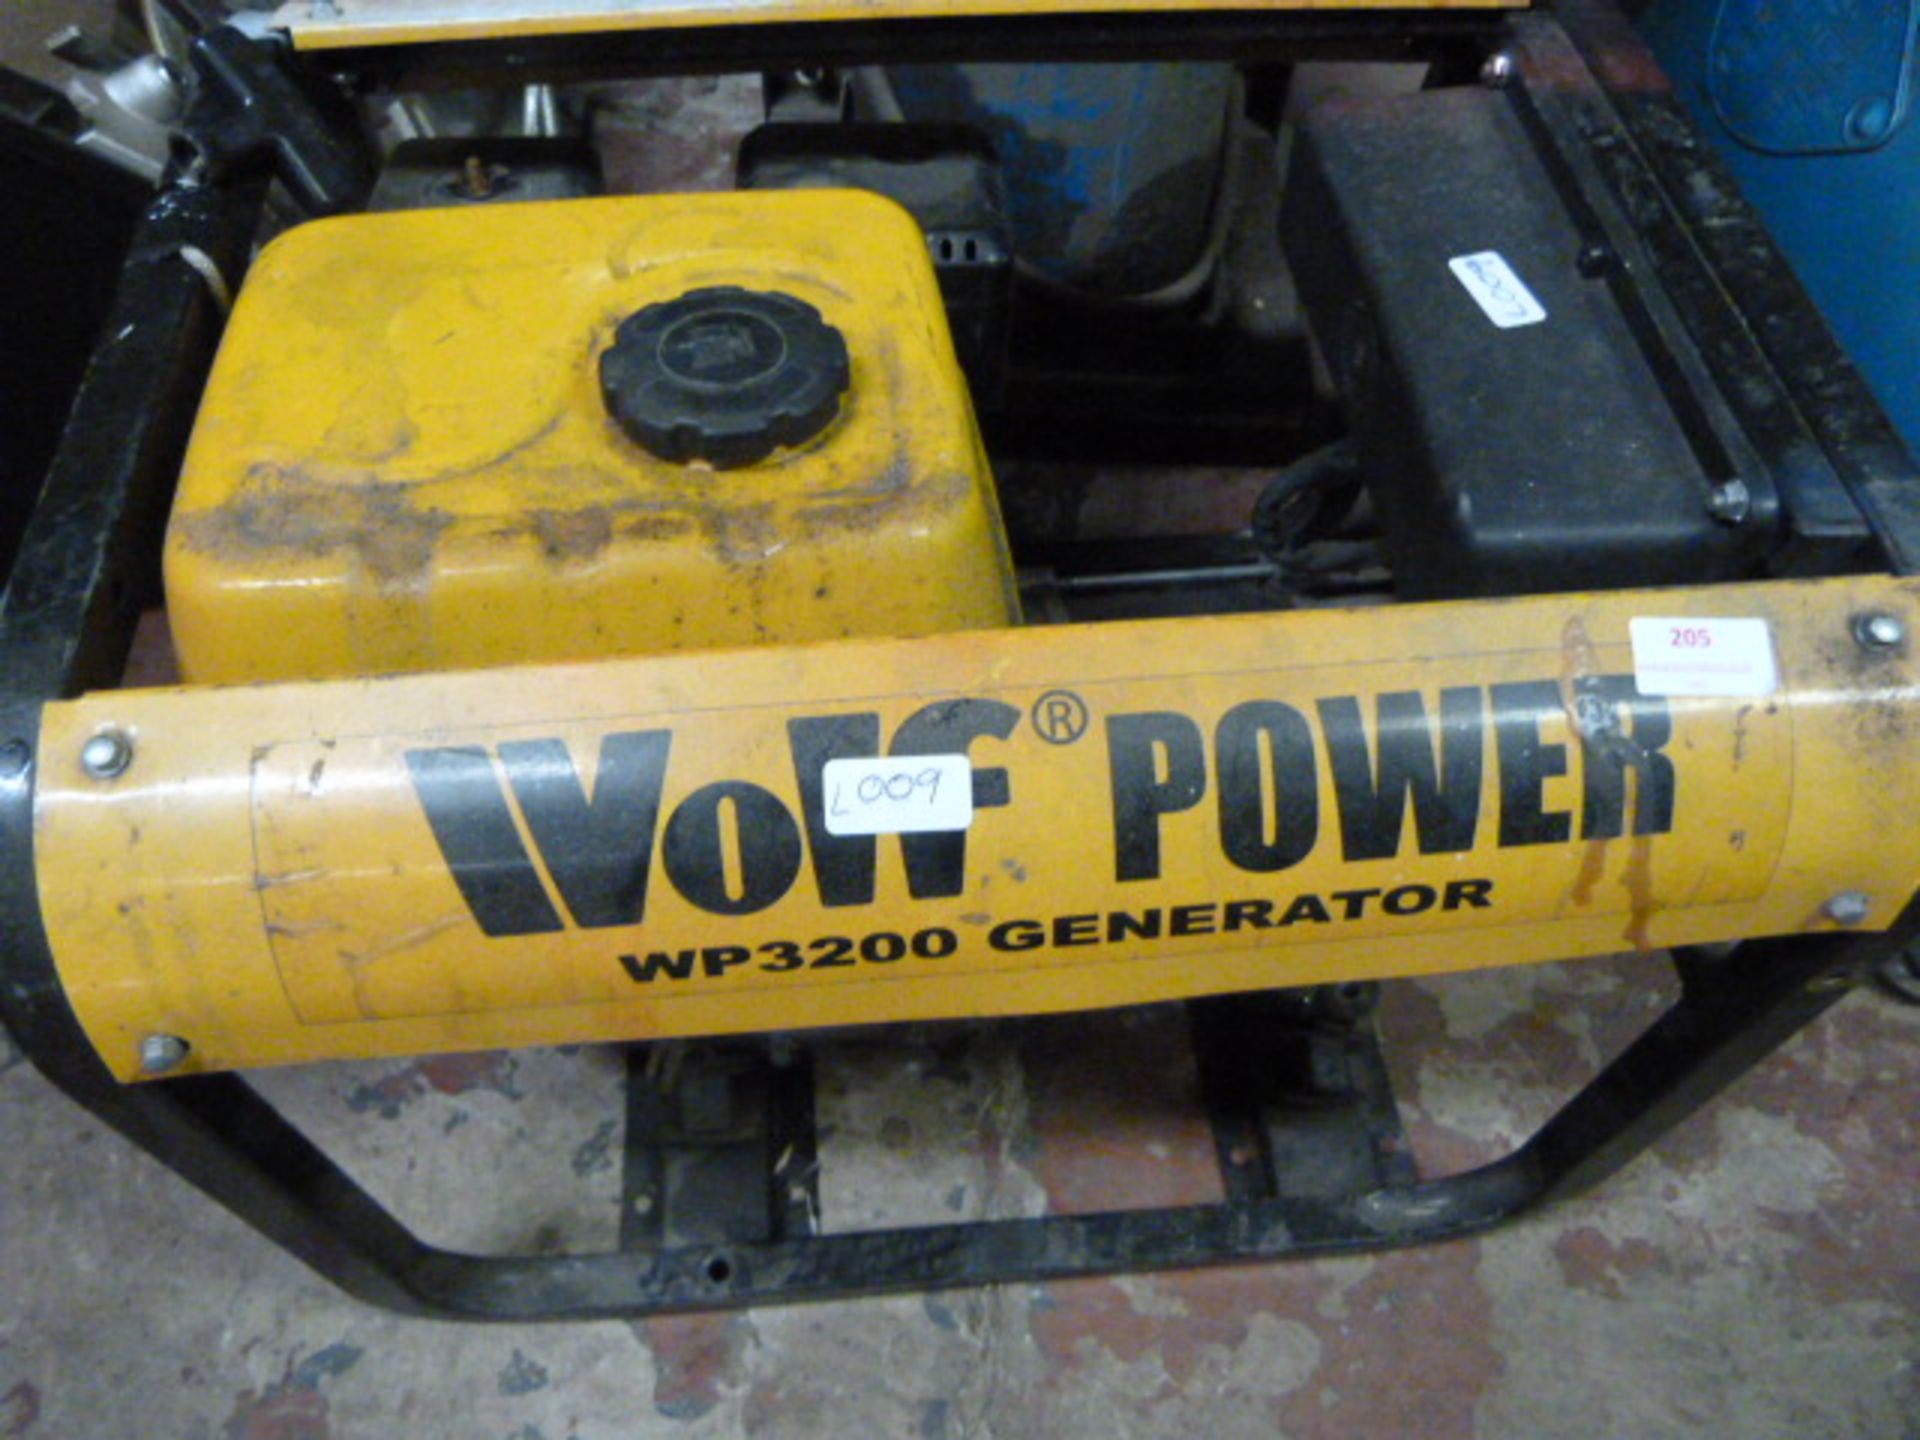 Wolfpower 3200 Generator